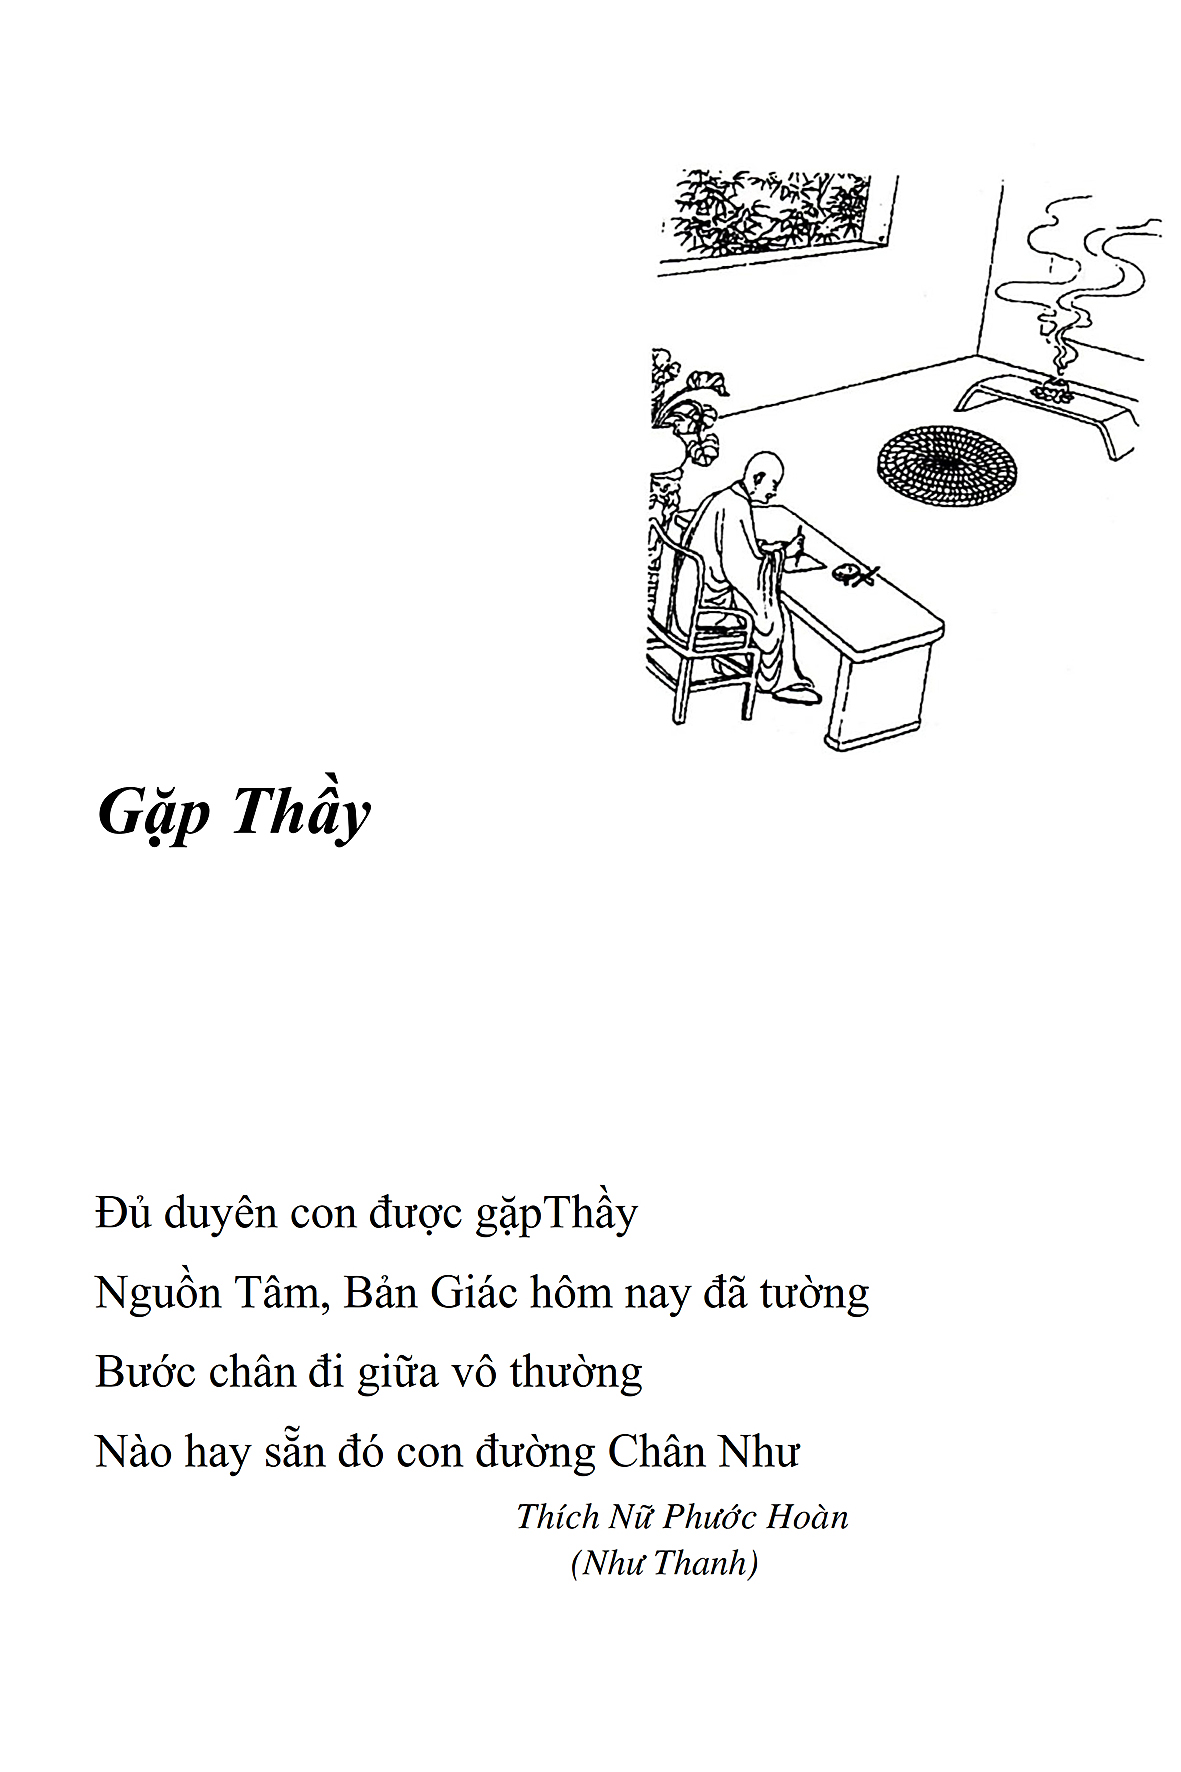 Gap Thay